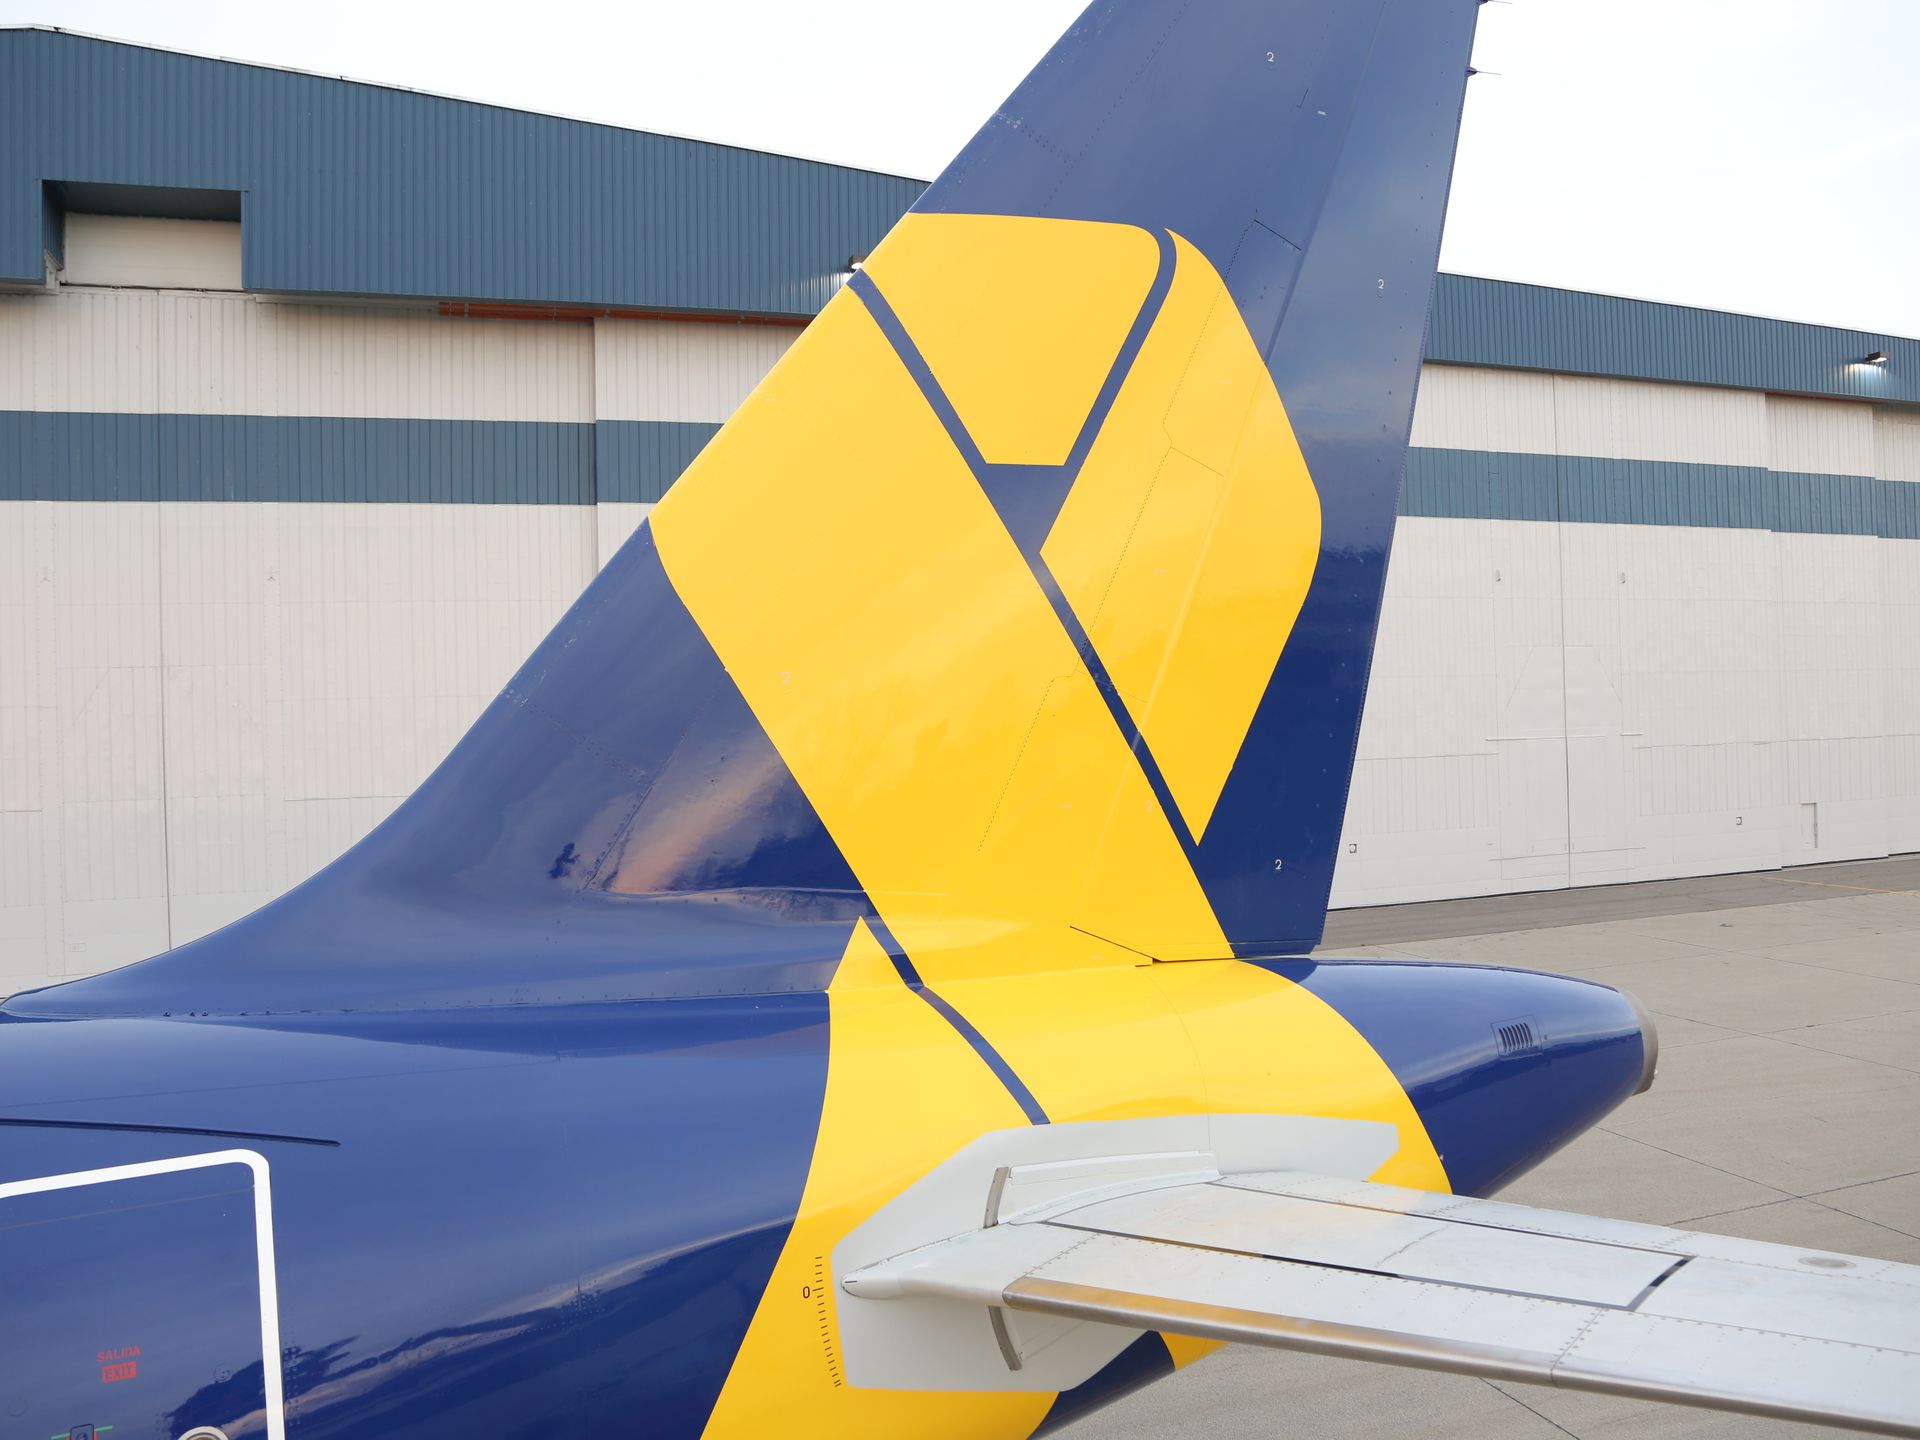 JetBlue Vets in Blue plane tail